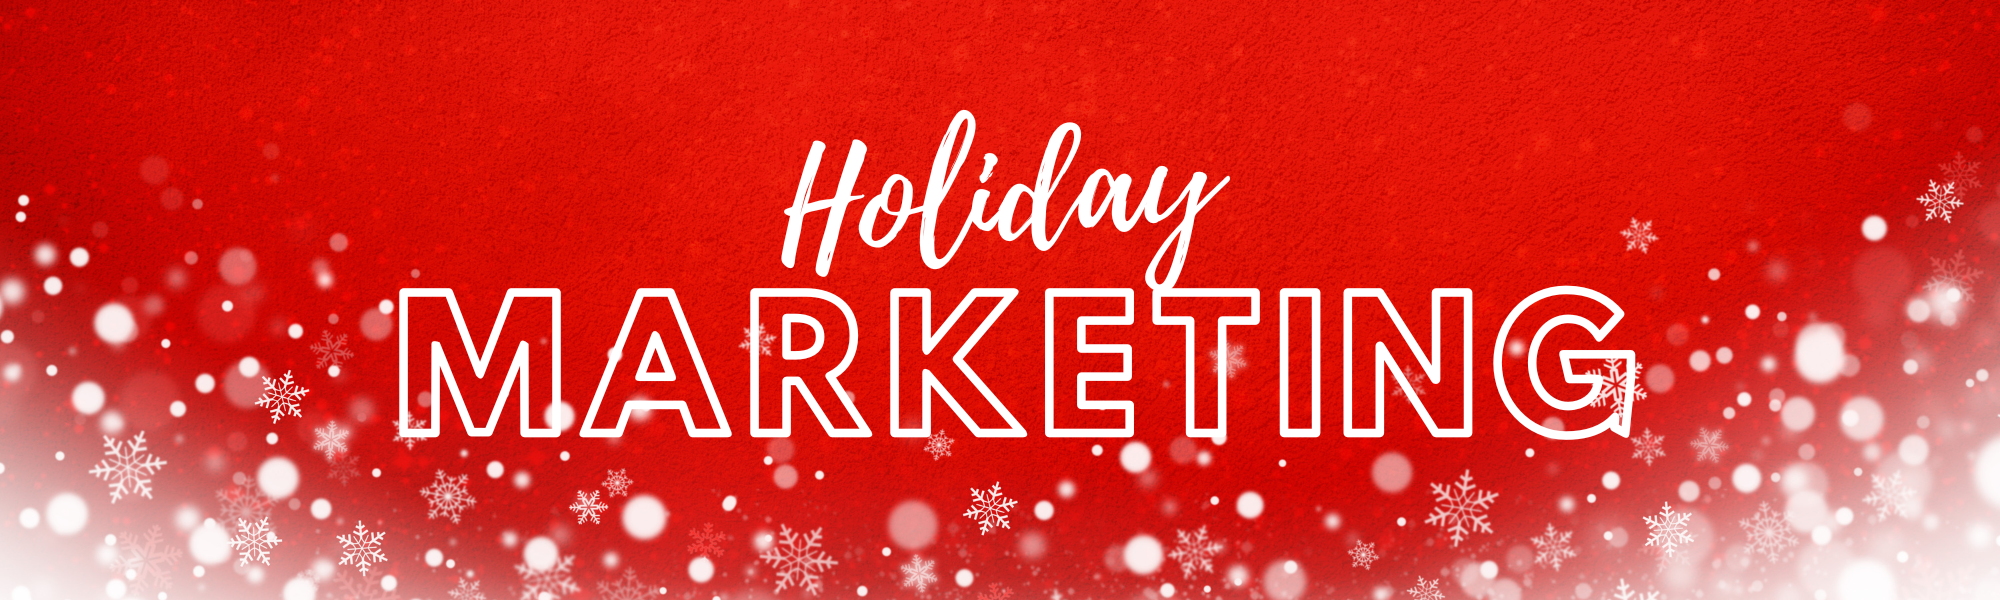 holiday marketing banner